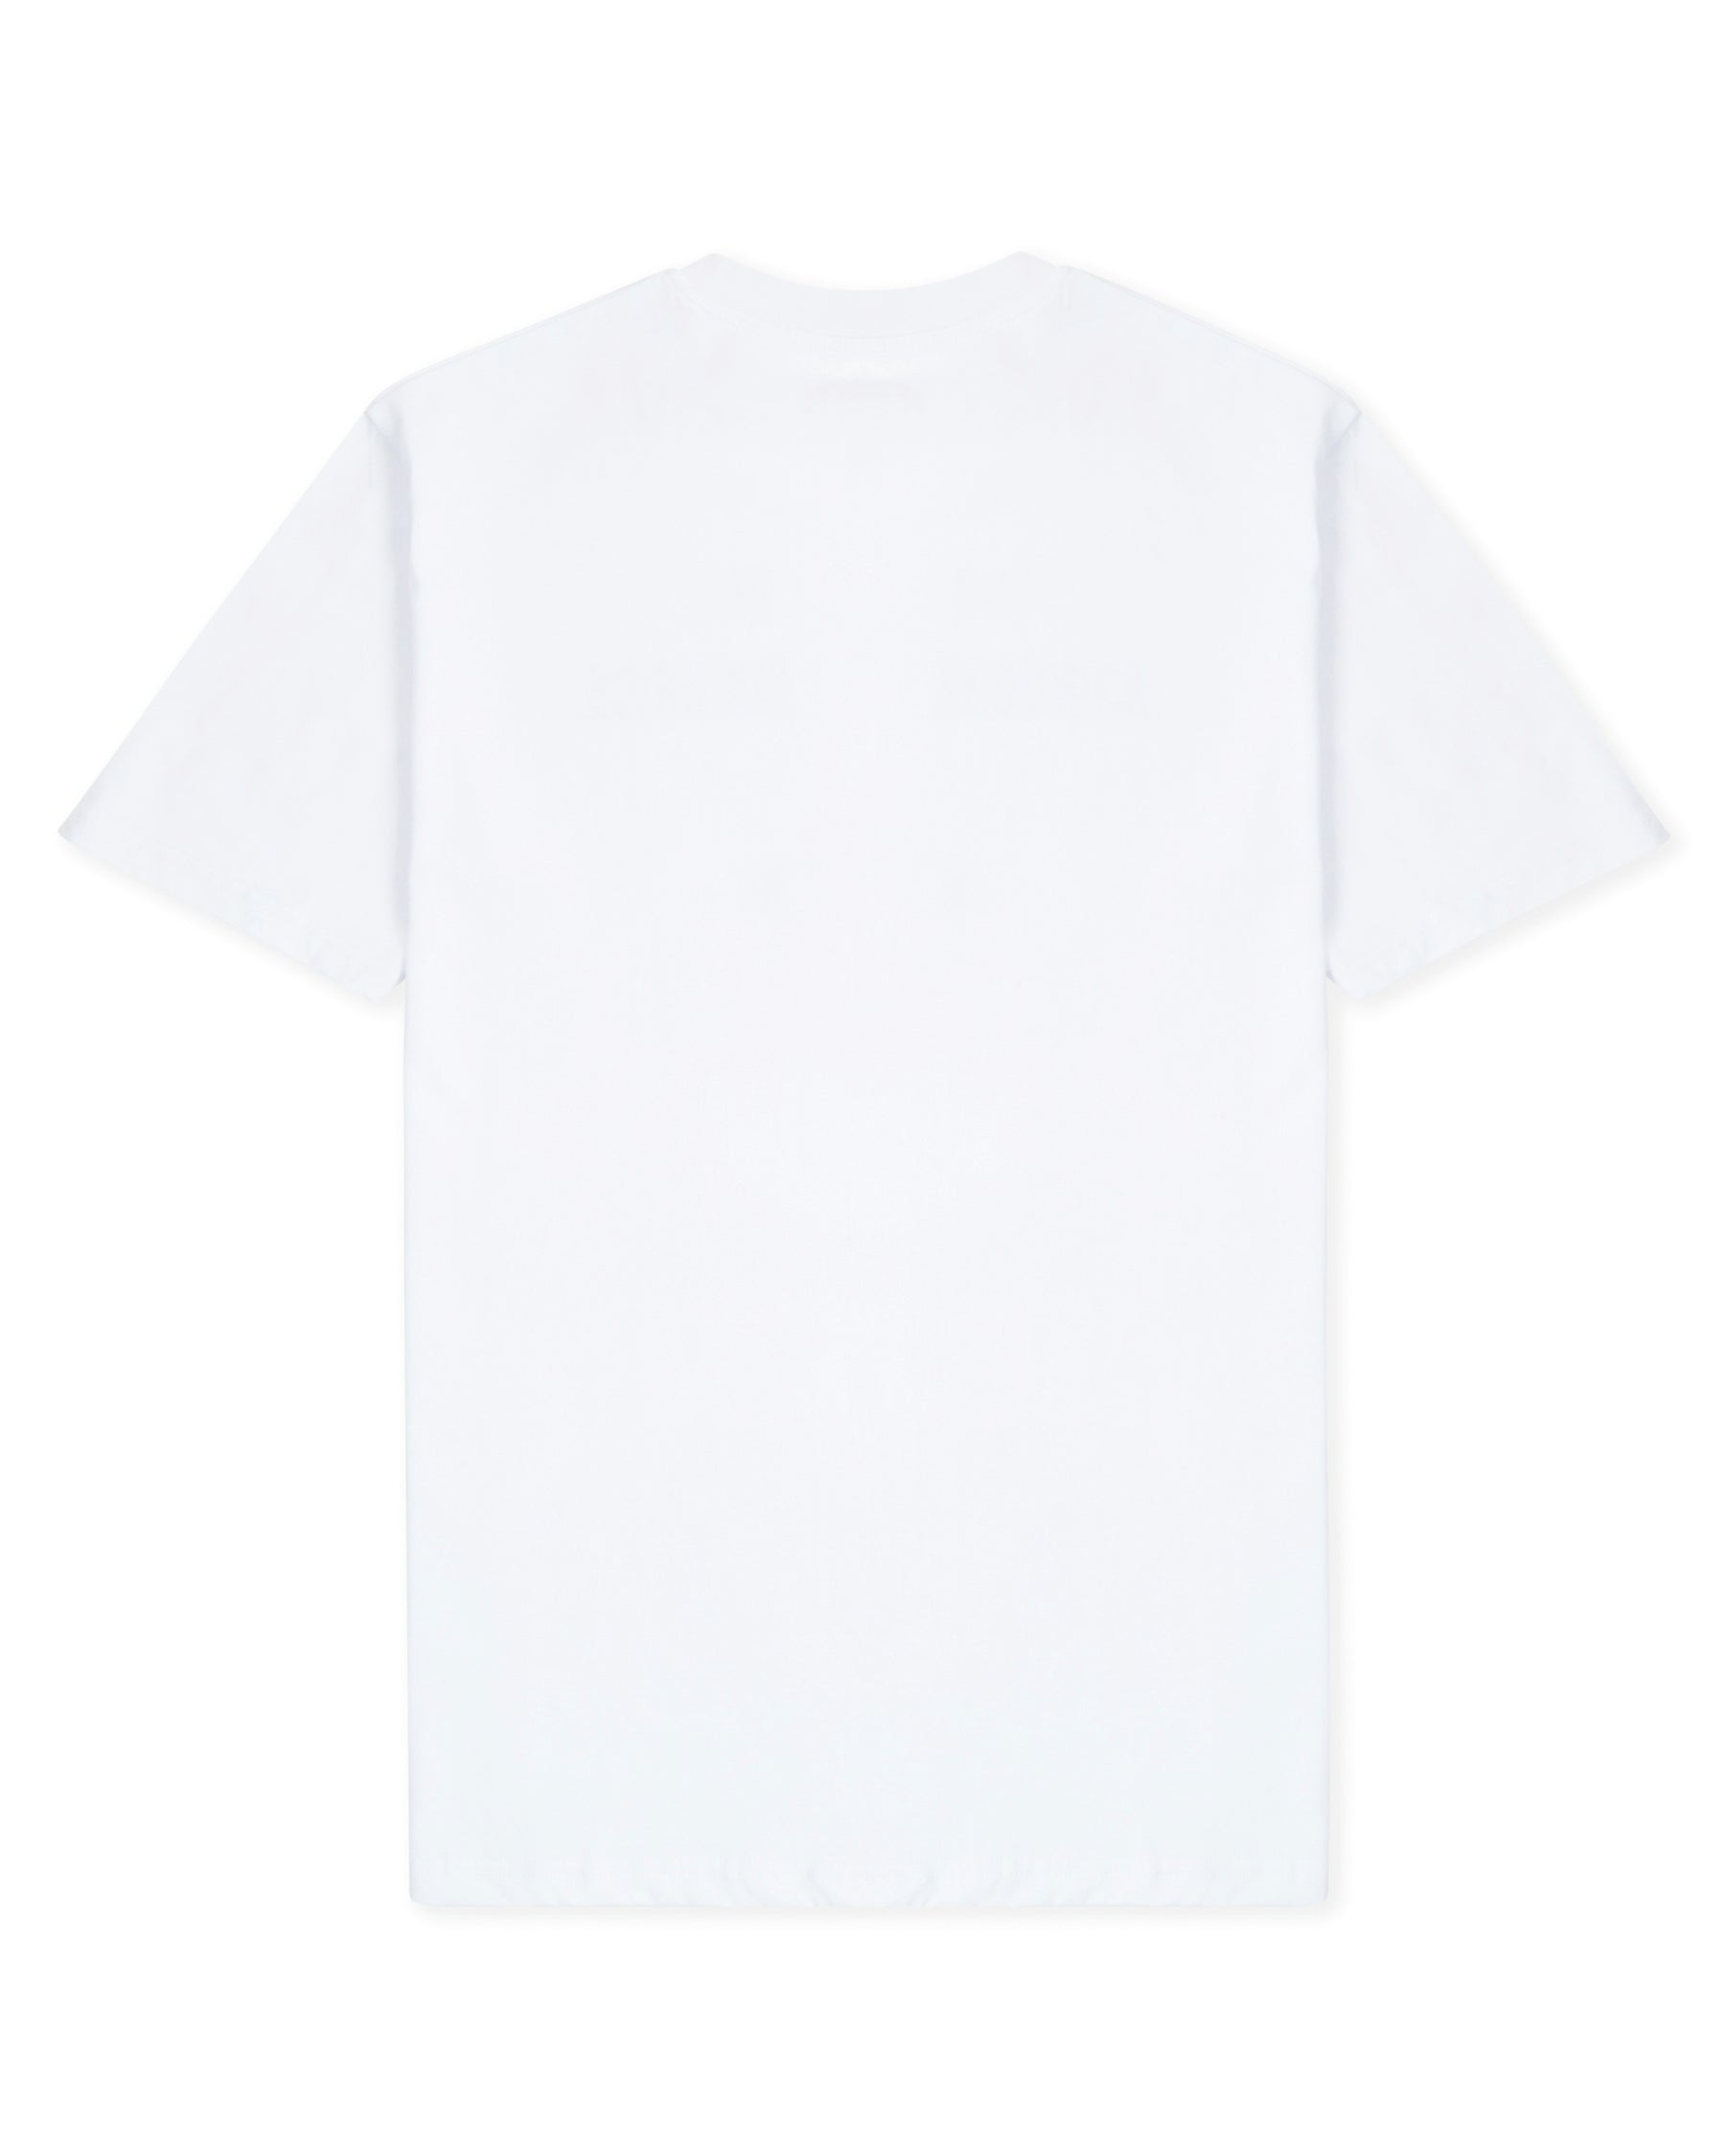 OG Core 3 Pack T-Shirts - Black/White/Grey